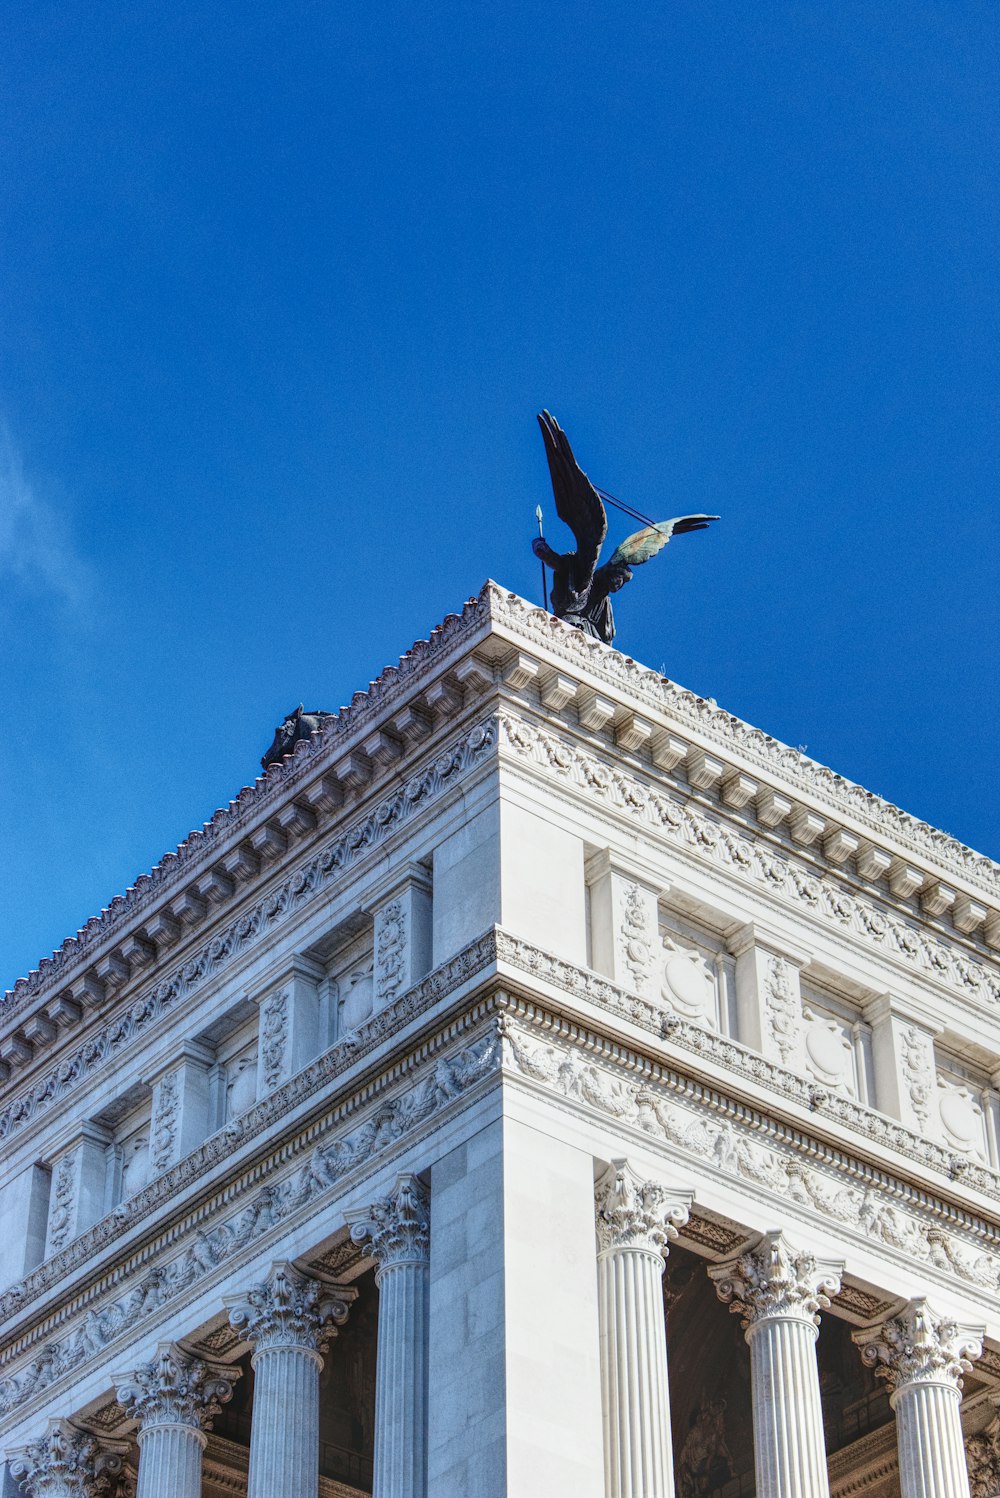 black bird flying over white concrete building during daytime